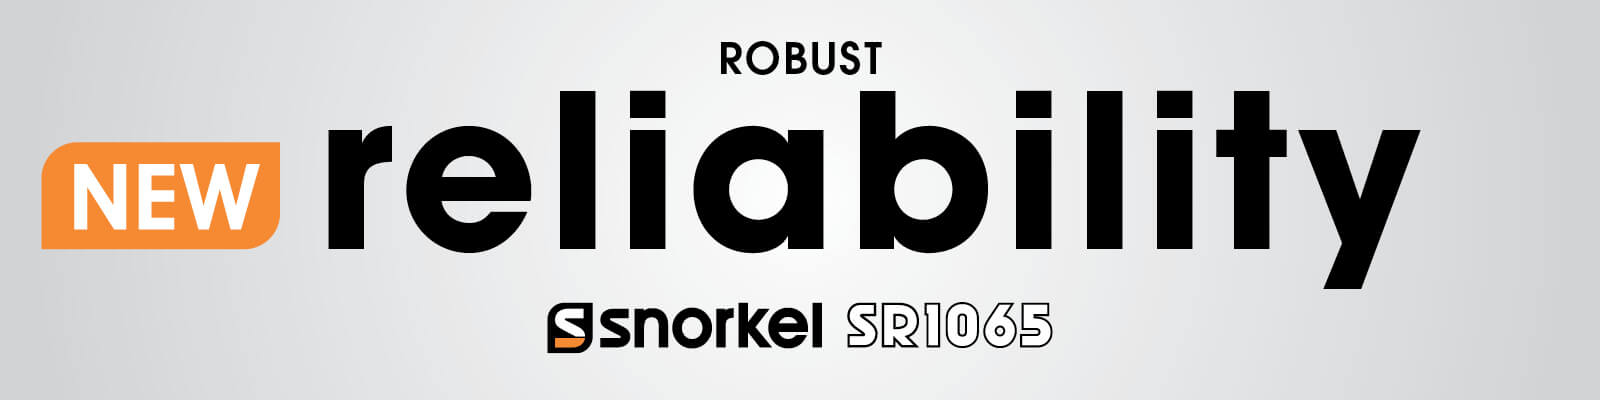 Robust Reliability Snorkel SR1065